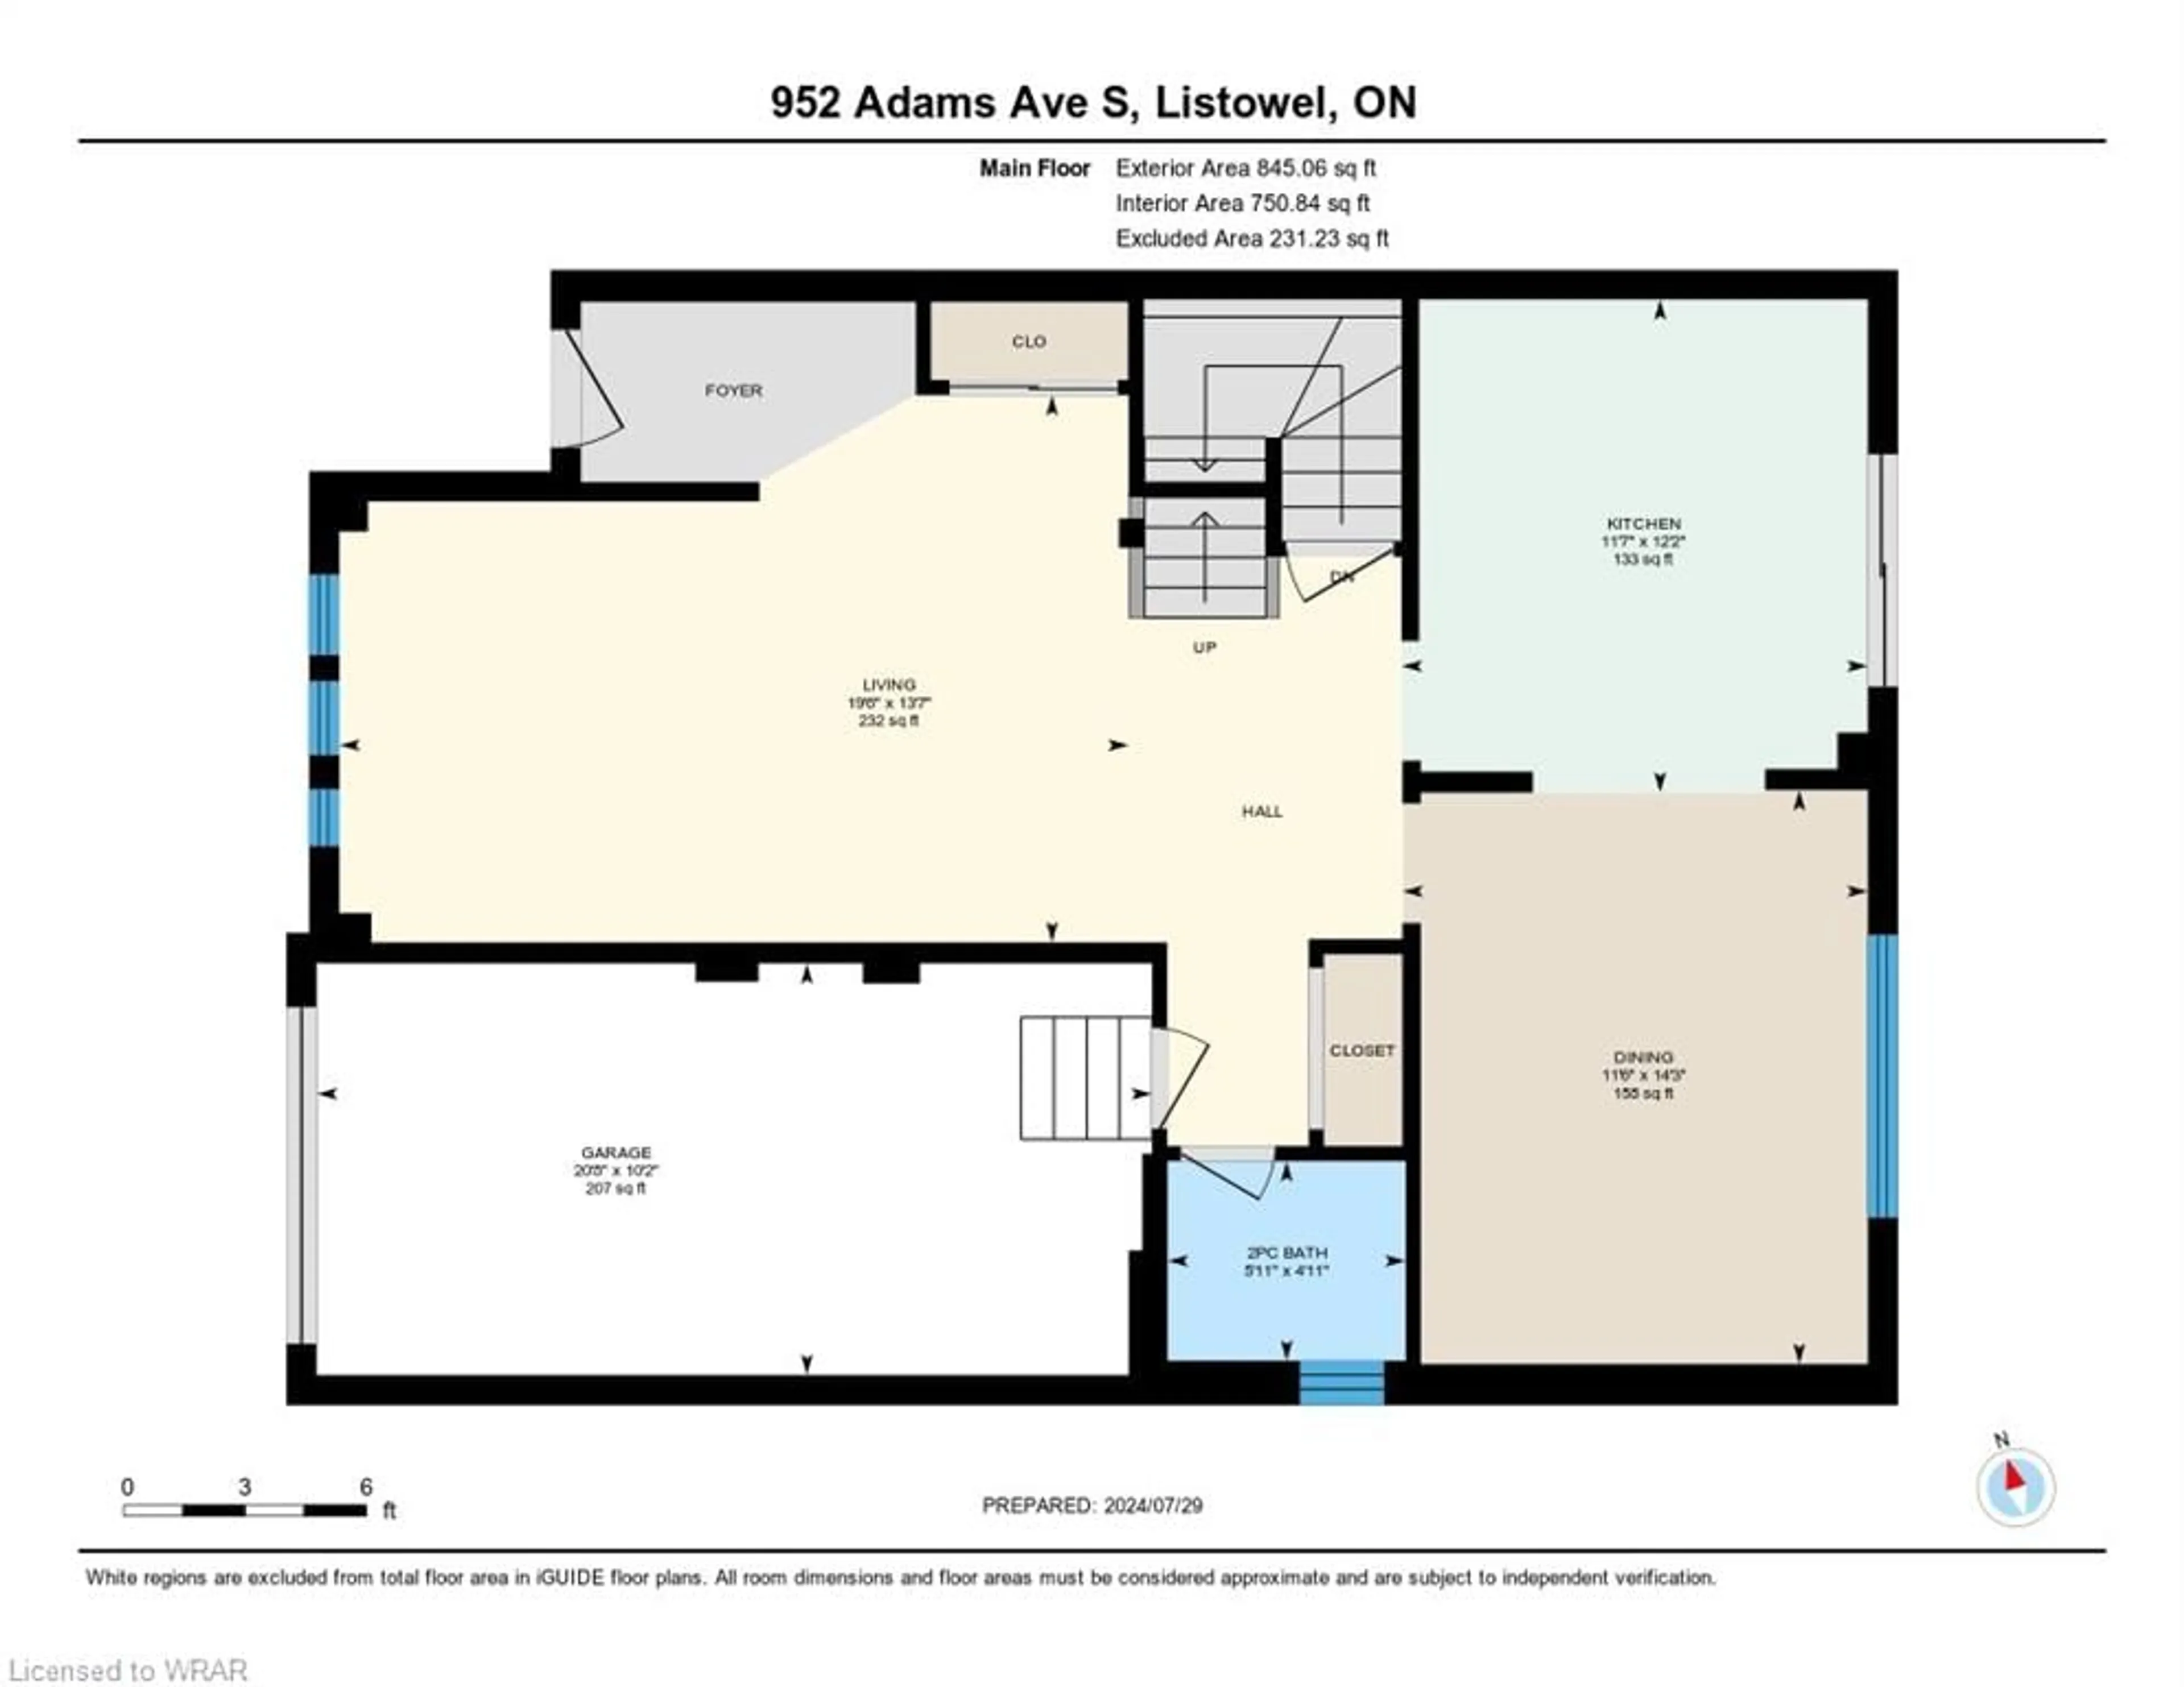 Floor plan for 952 Adams Ave, Listowel Ontario N4W 0E6